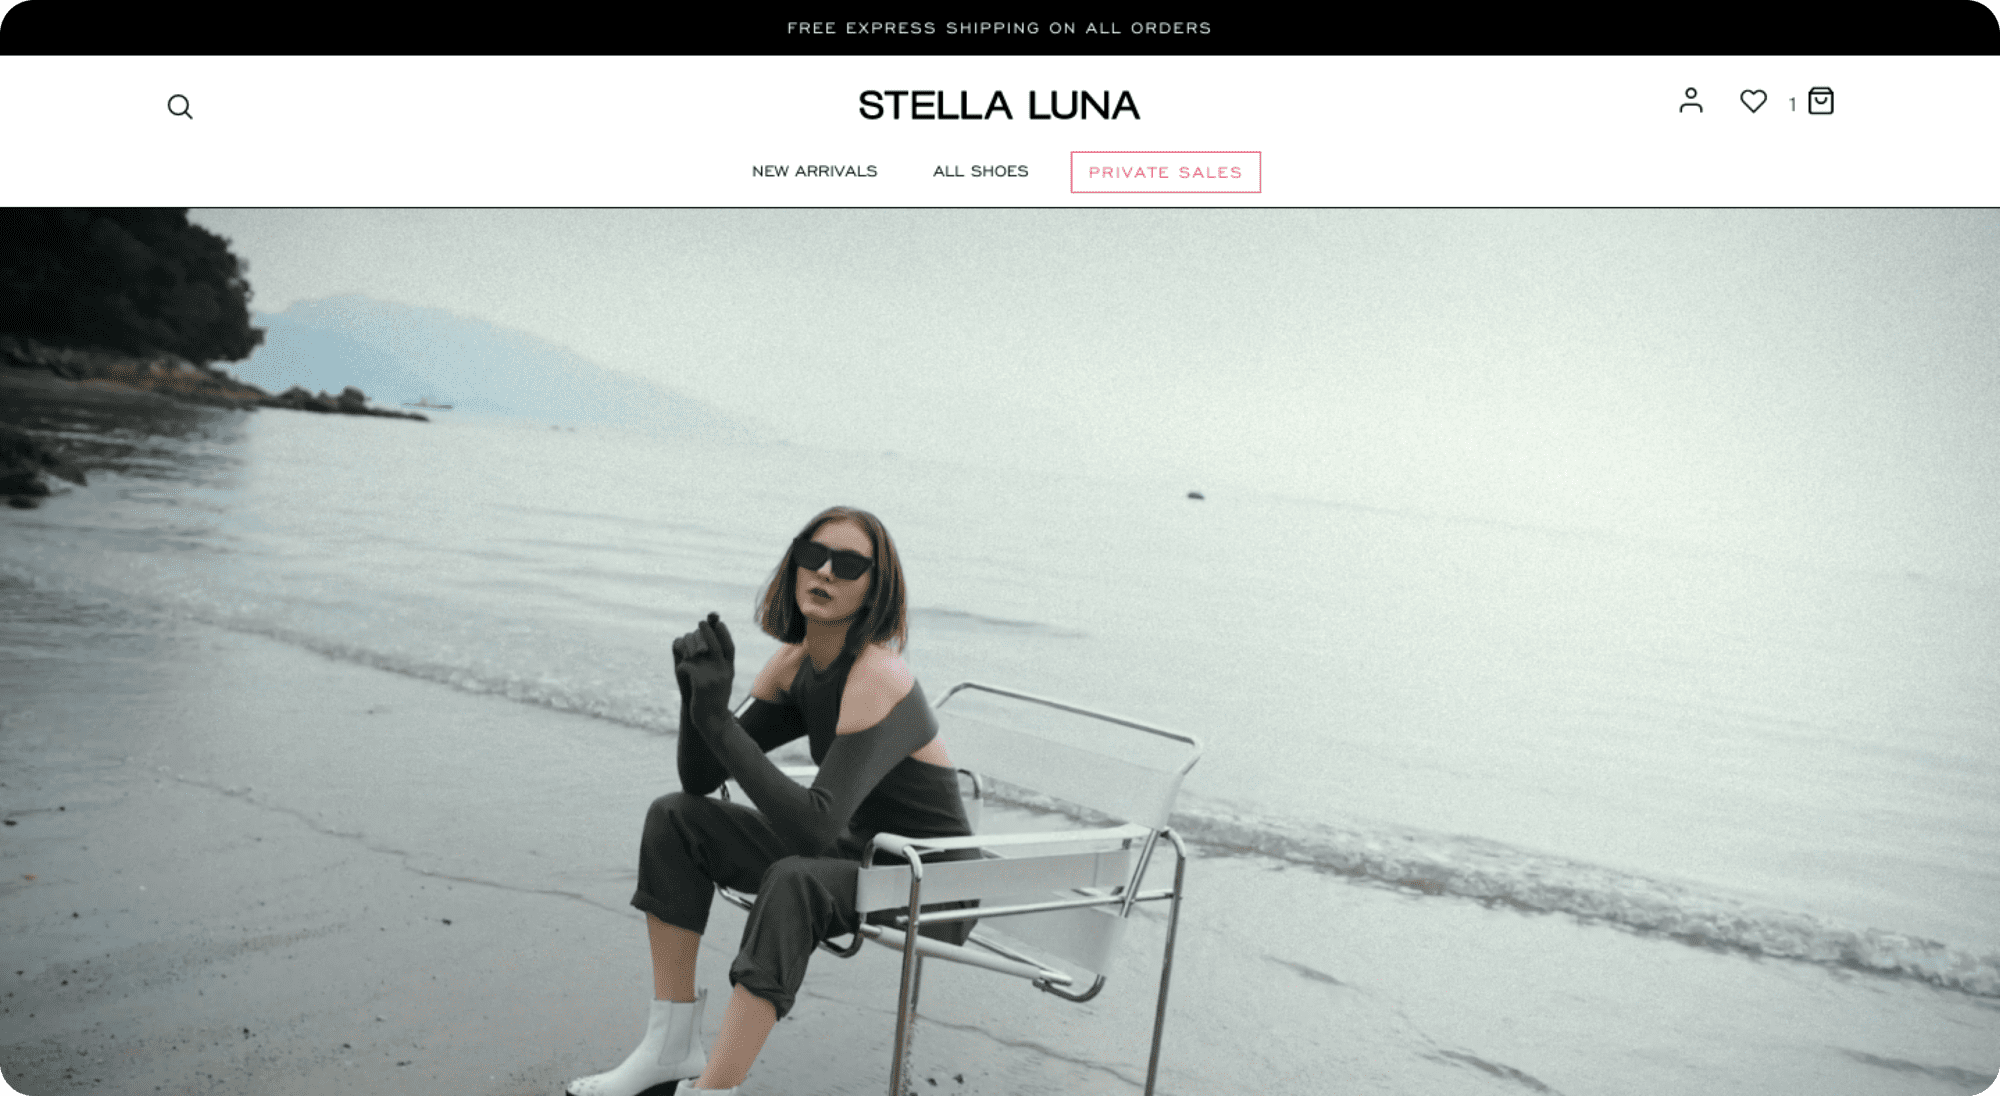 ITC also leveraged Magento to power the premium Asian shoe brand Stella Luna's website